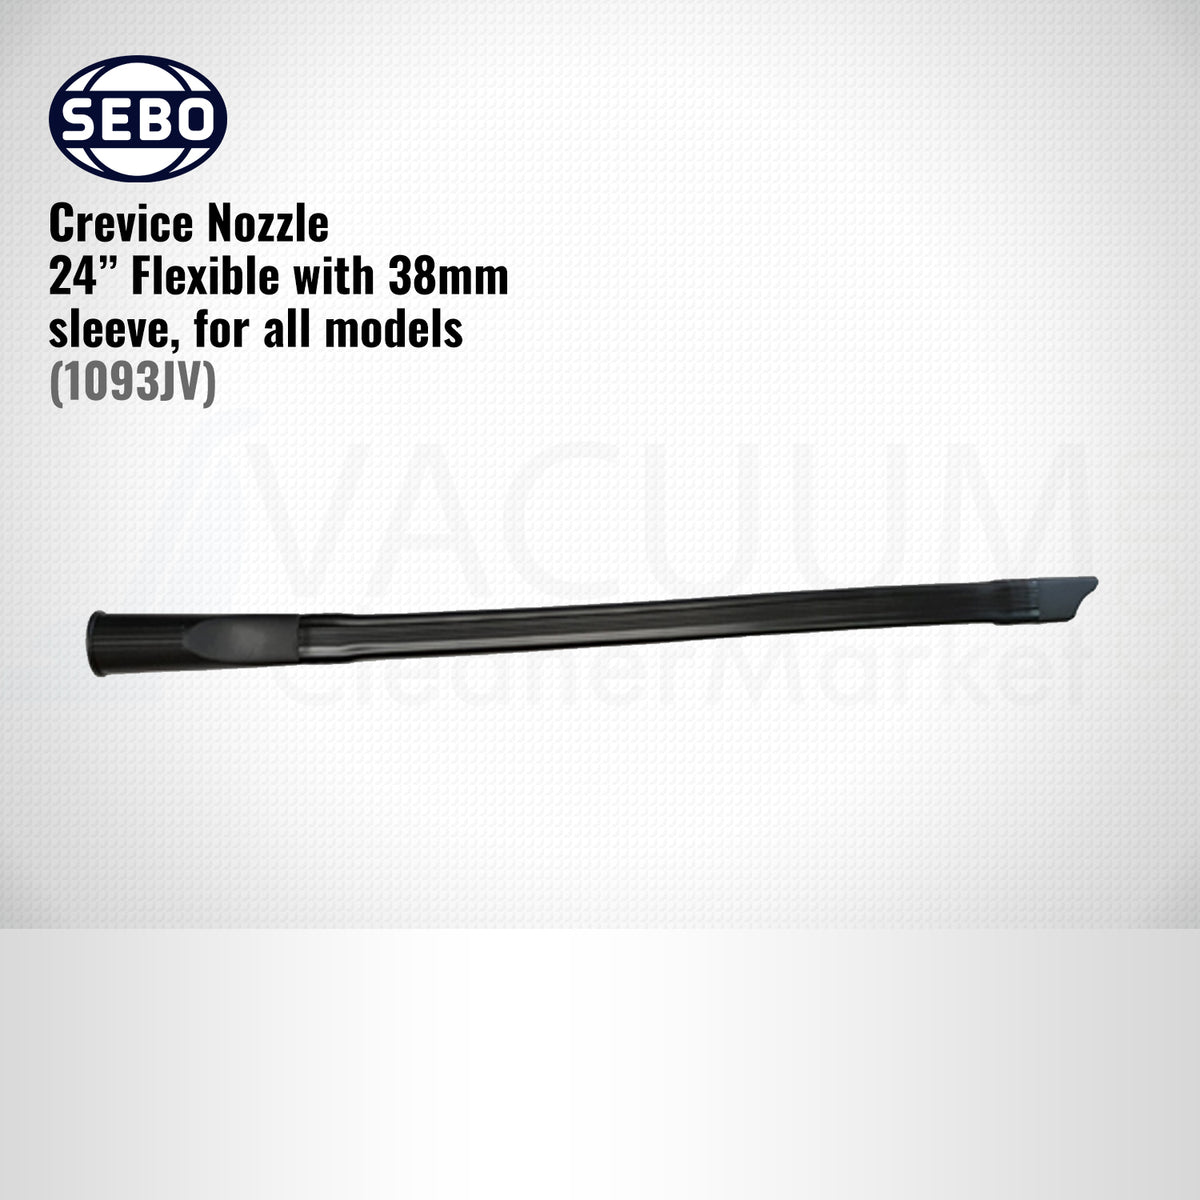 Sebo Crevice Nozzle Tool Flexible - More Than Vacuums